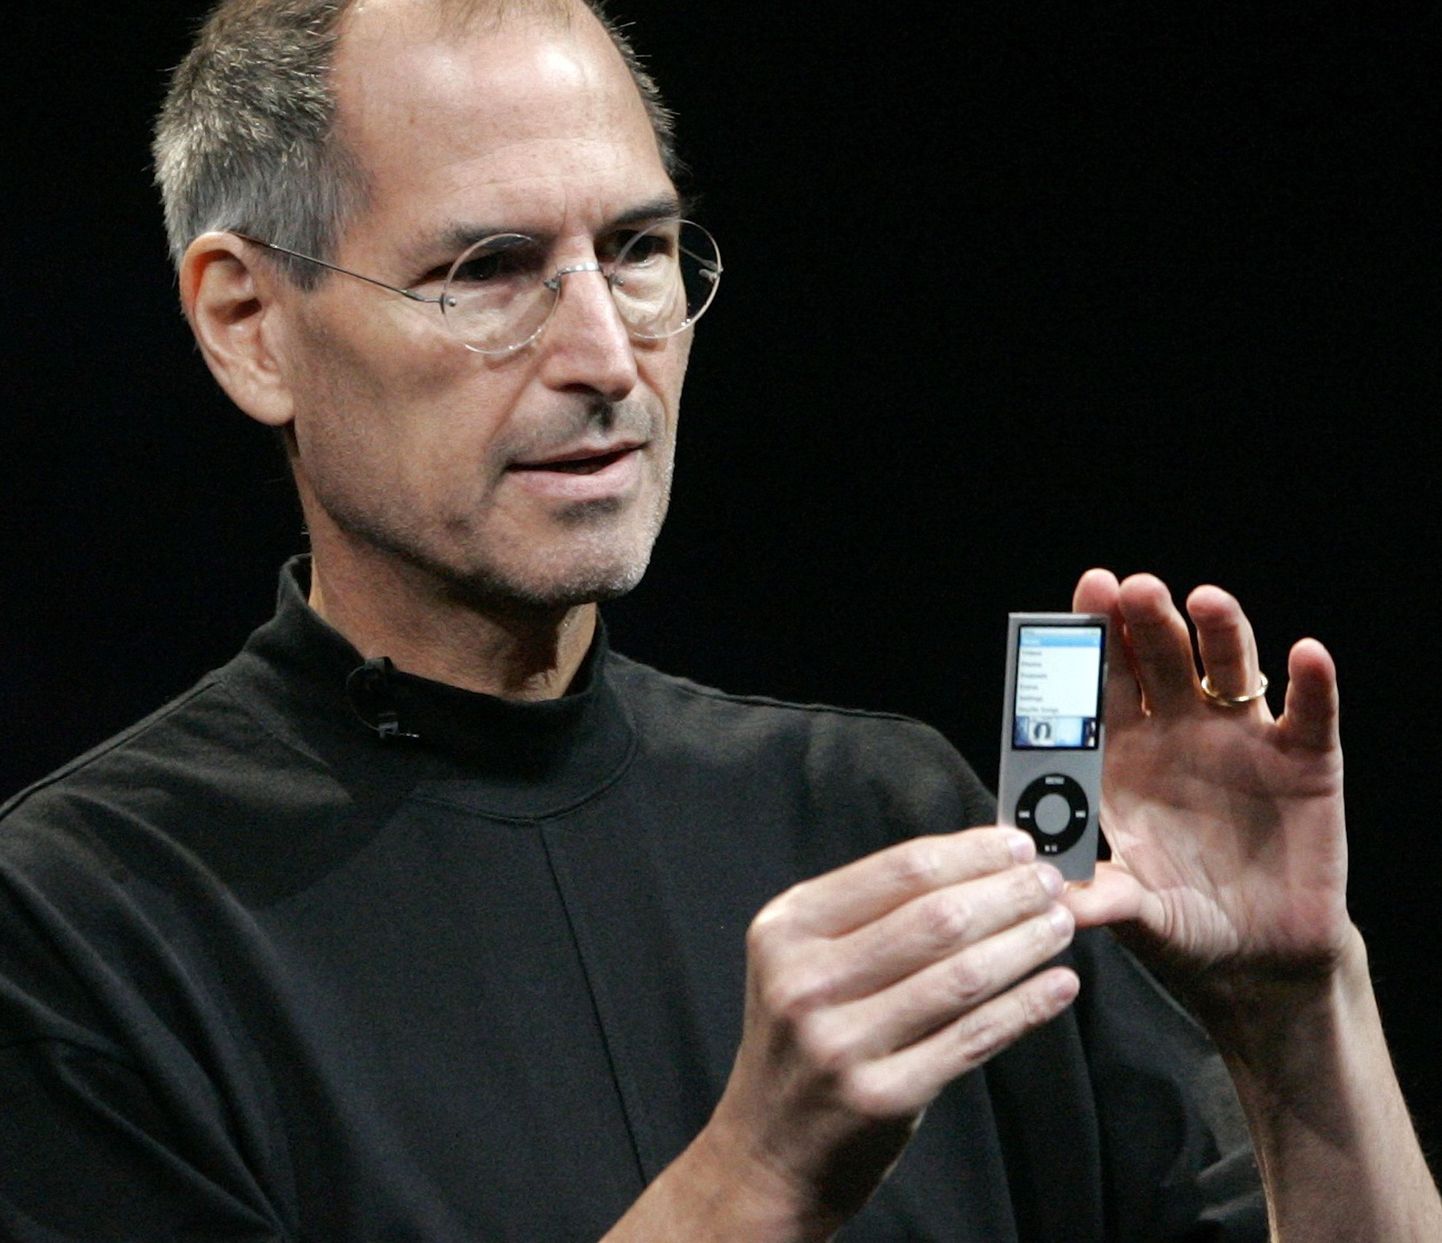 Steve Jobs: alguses pruukis LSD-d, hiljem tegi iPodi.